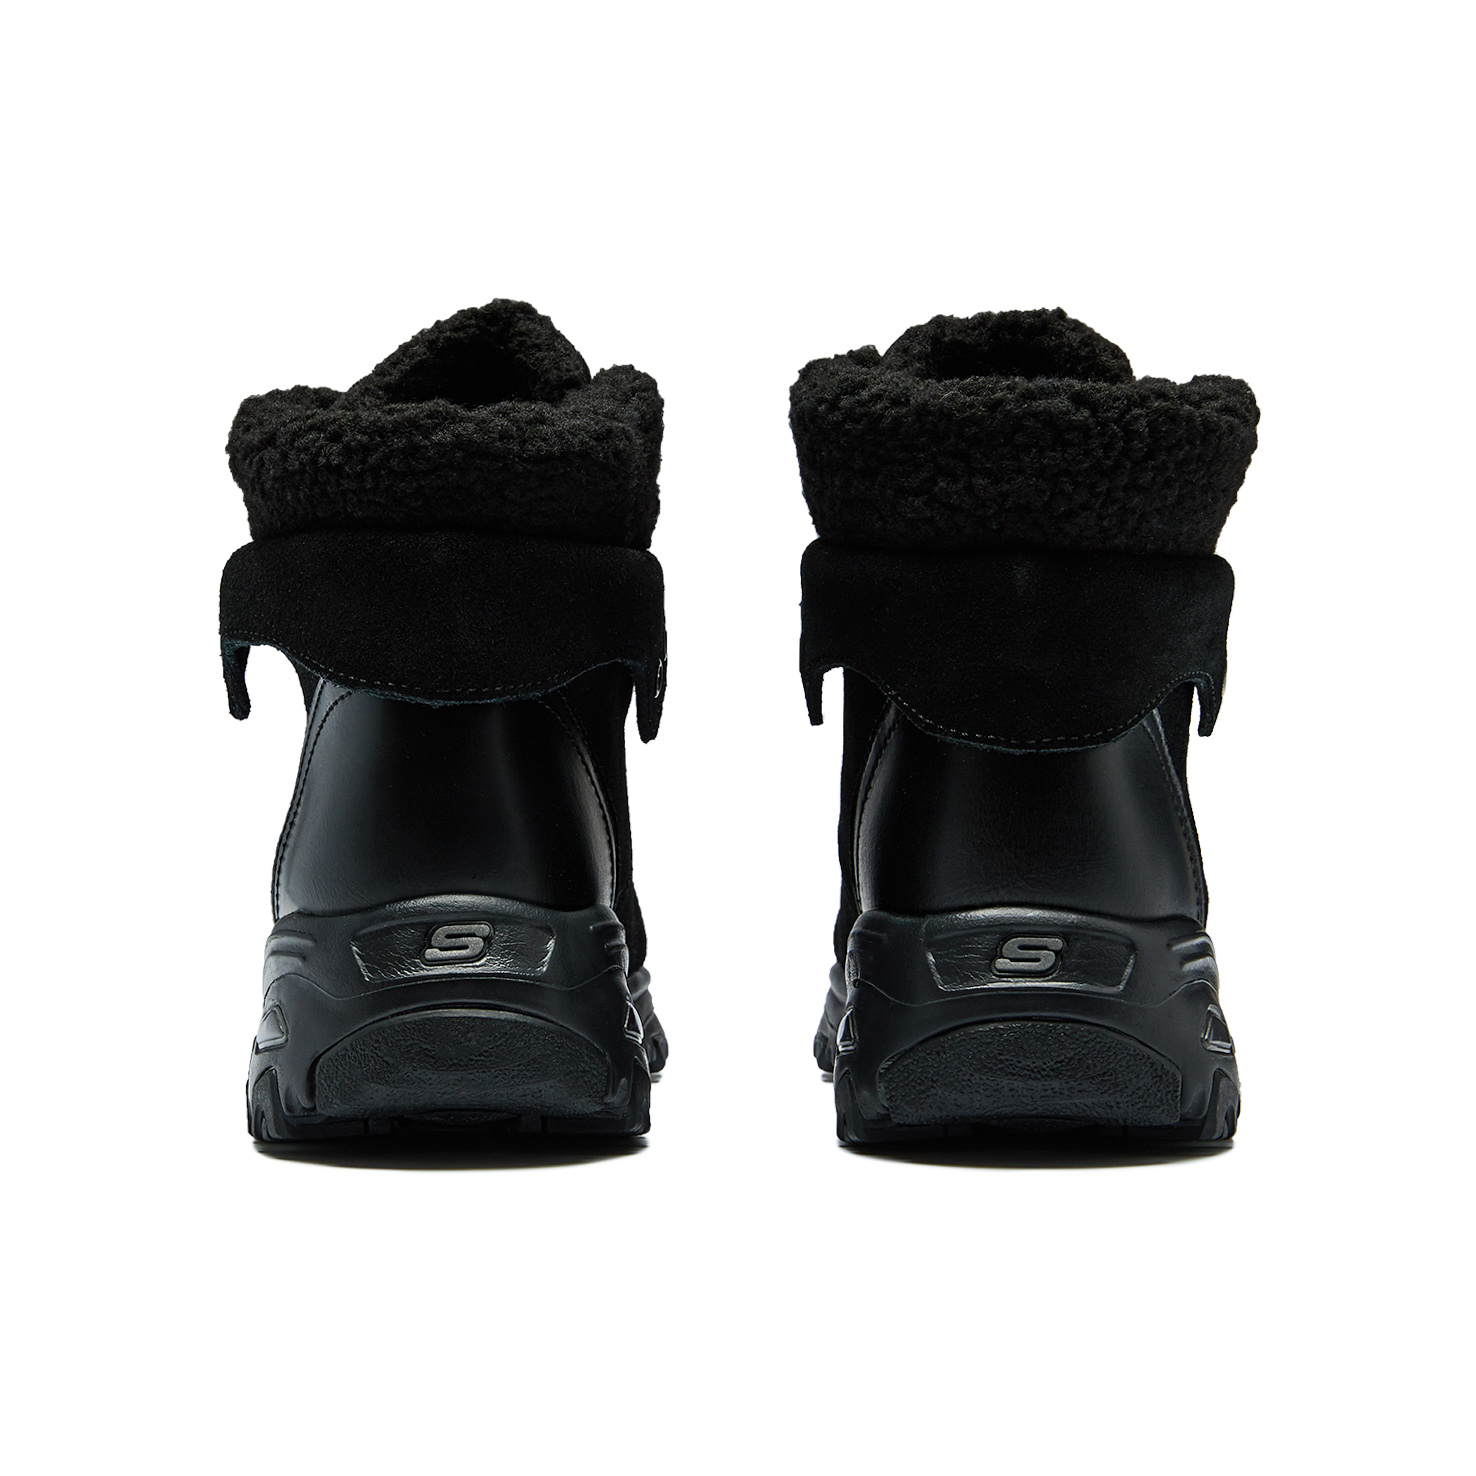 Women's boots SKECHERS, размер 36, цвет черный SK167087 - фото 4